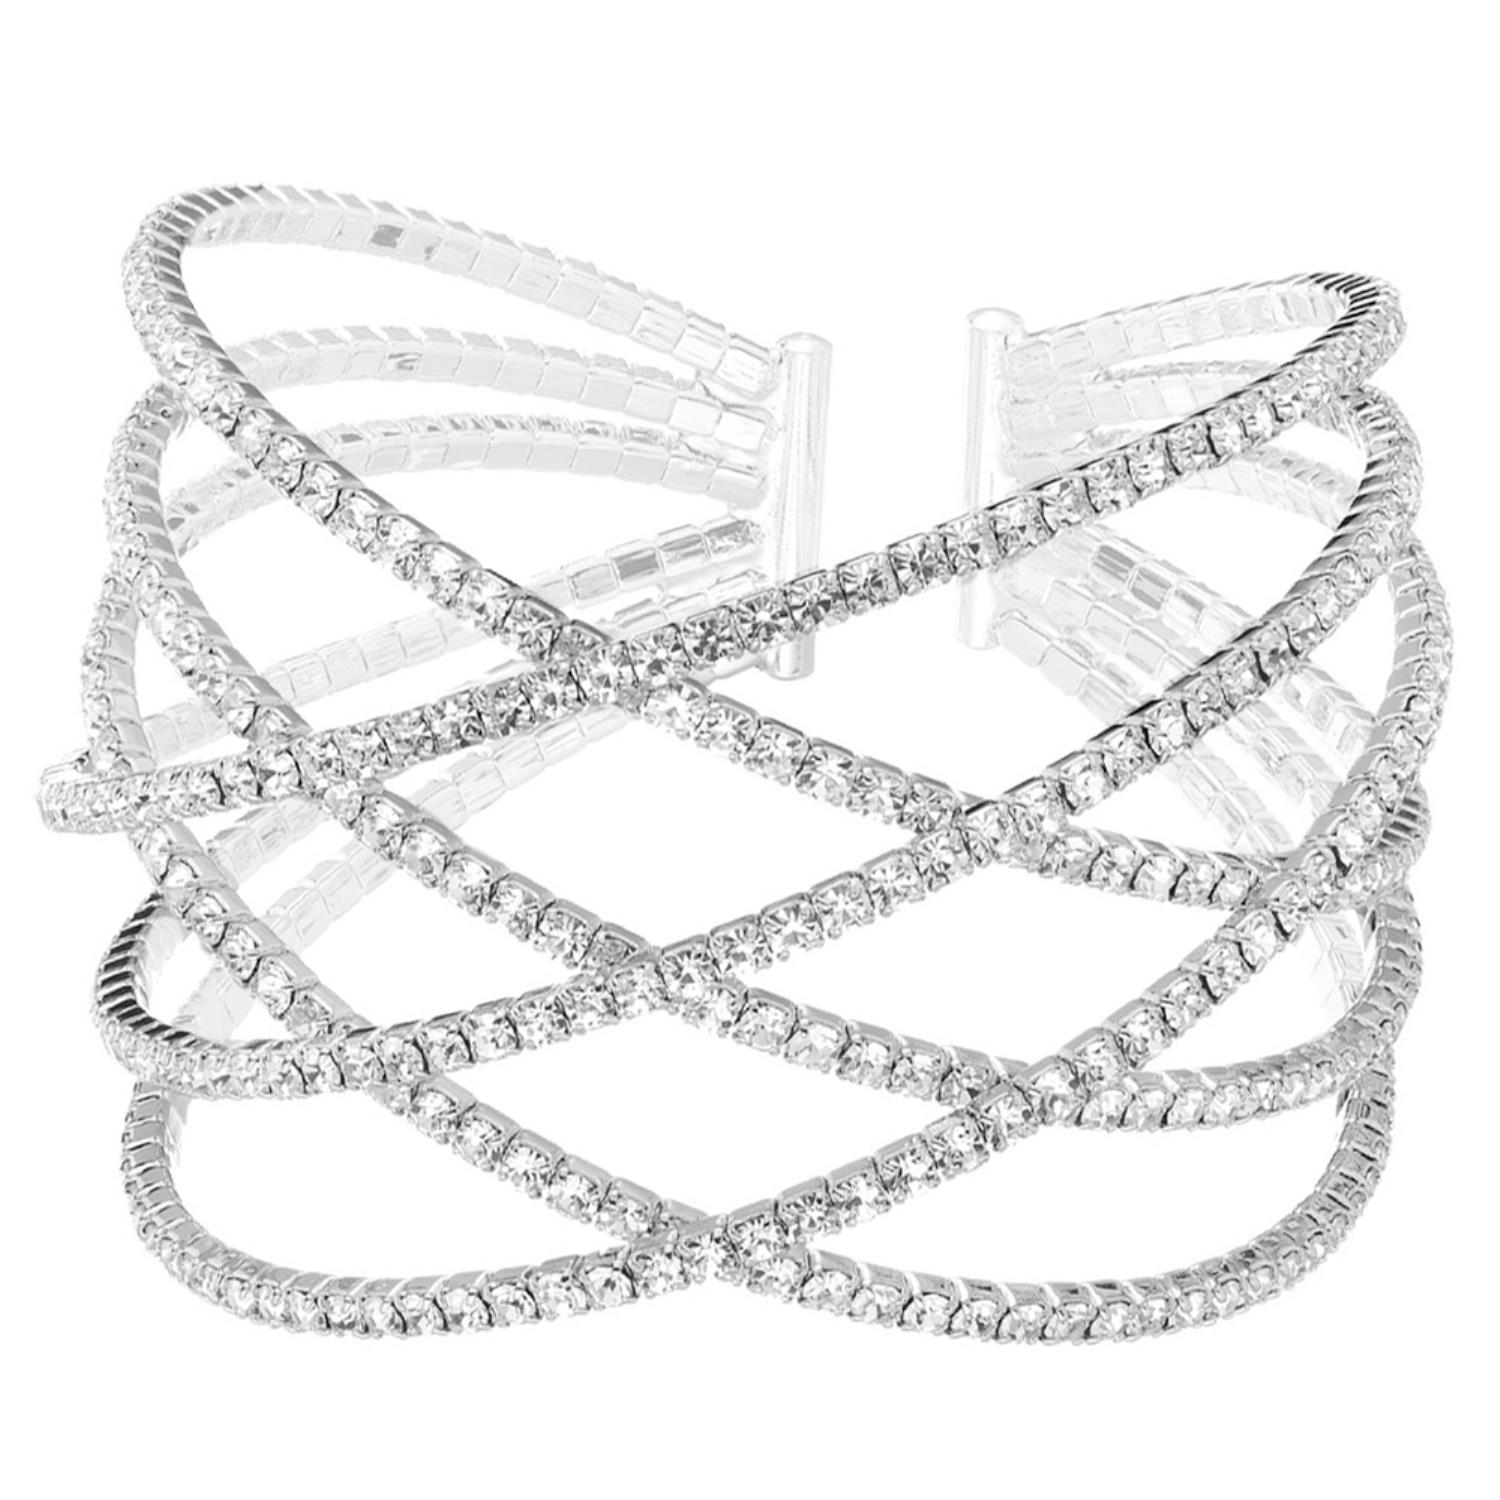 Rhinestone Six Row Layer Wire Bracelet - Love It Clothing